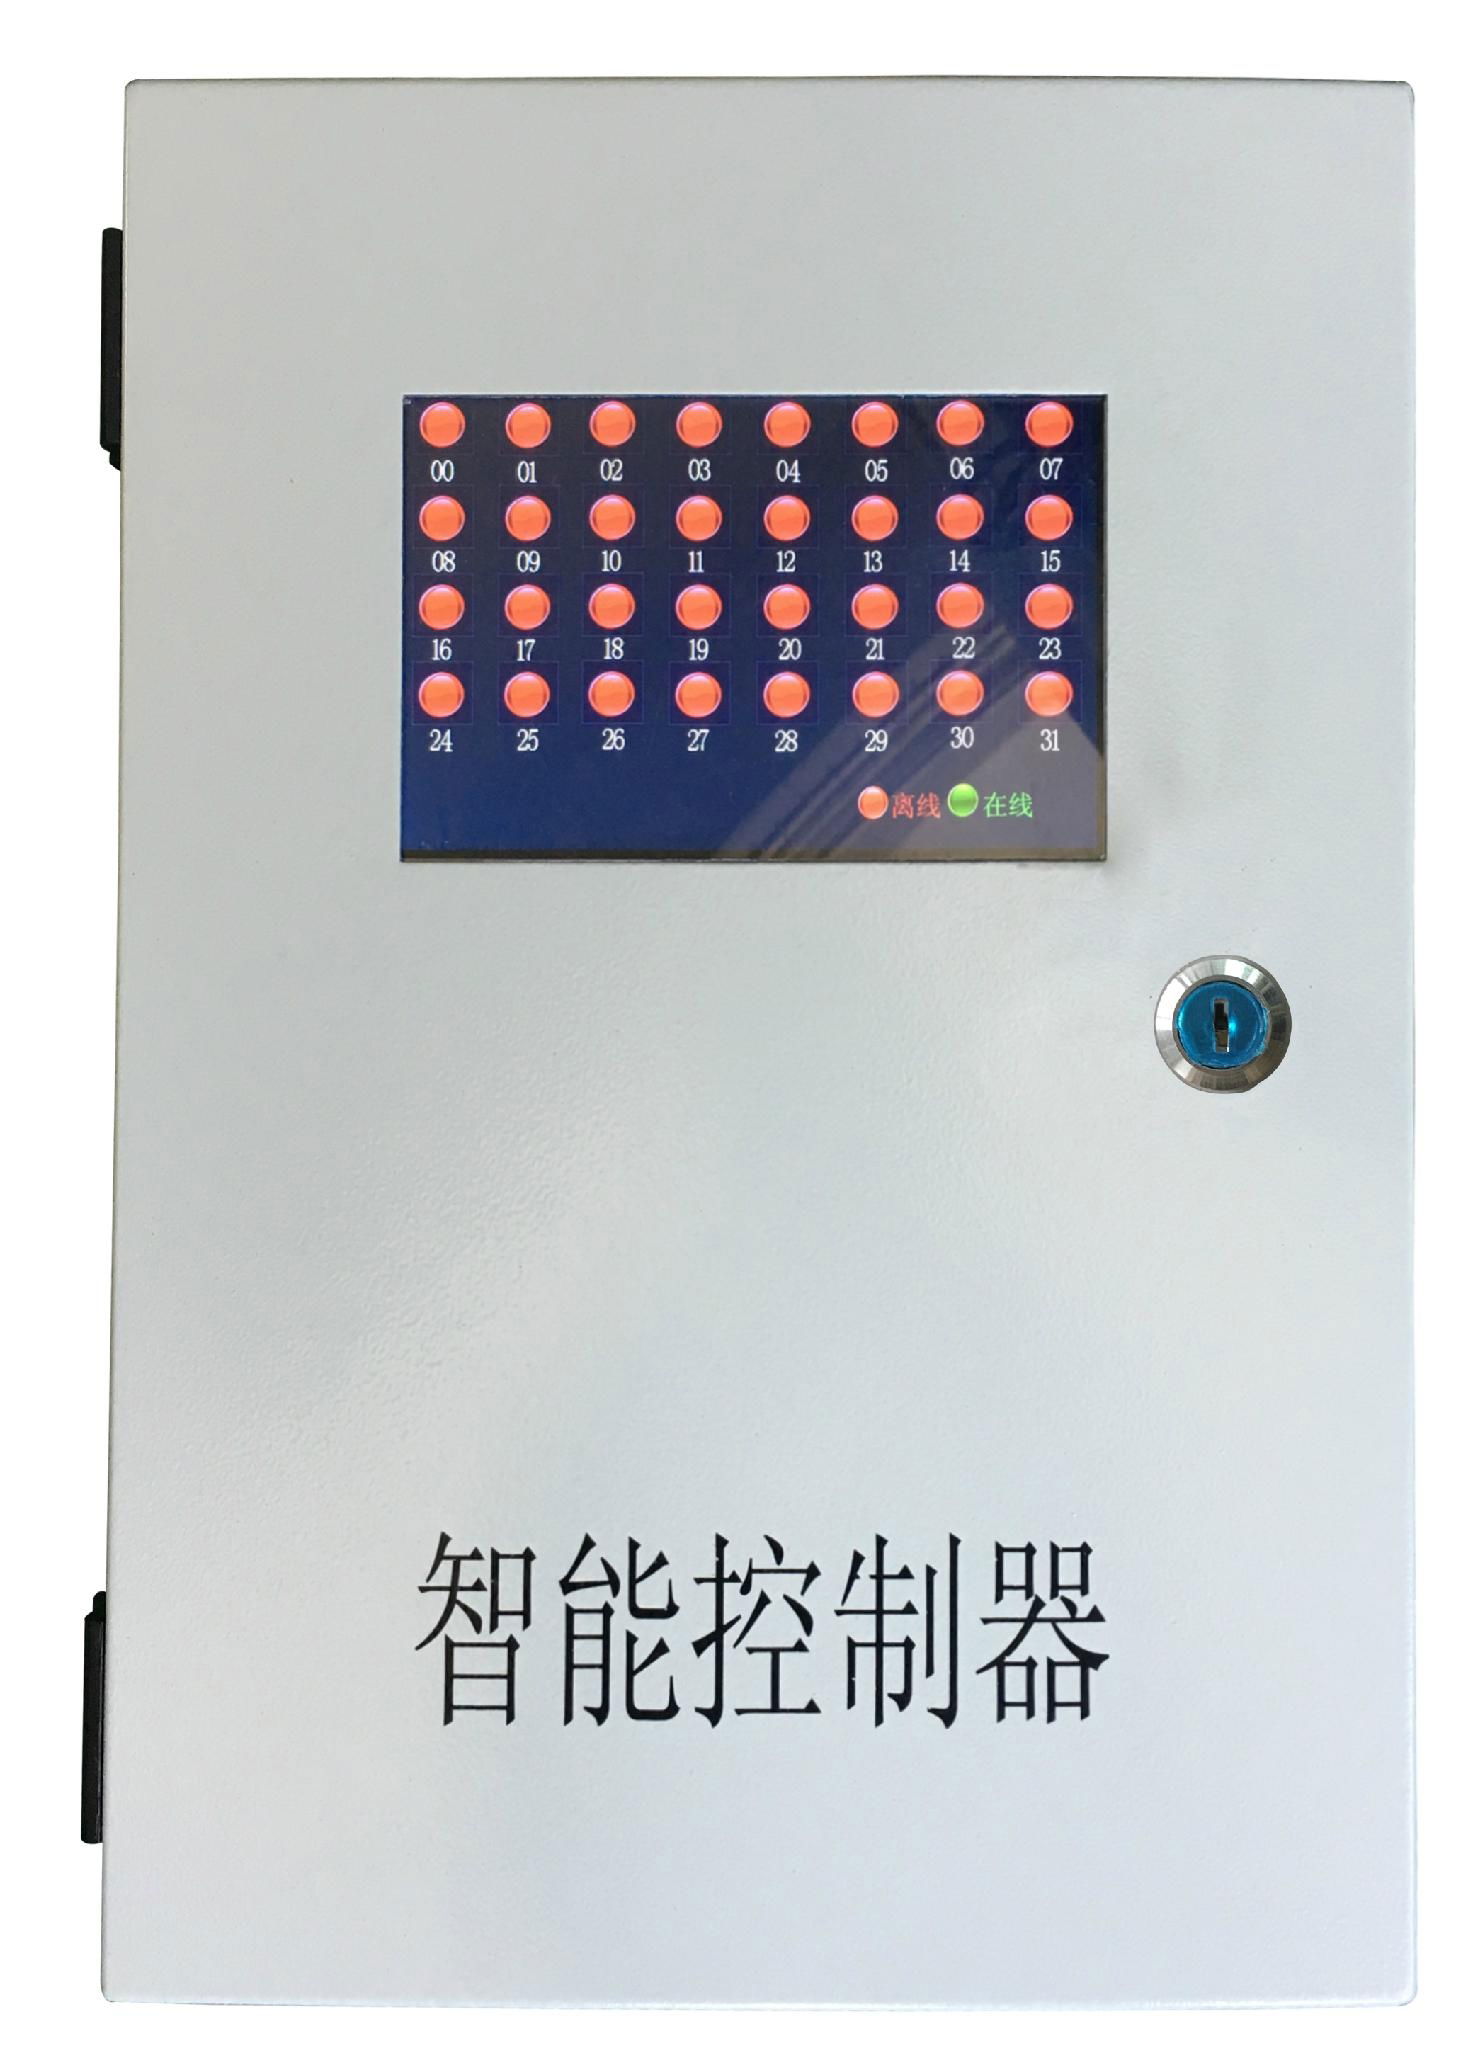 IP-AC100 T16 ACCESS CONTROLLER & ELEVATOR CONTROL